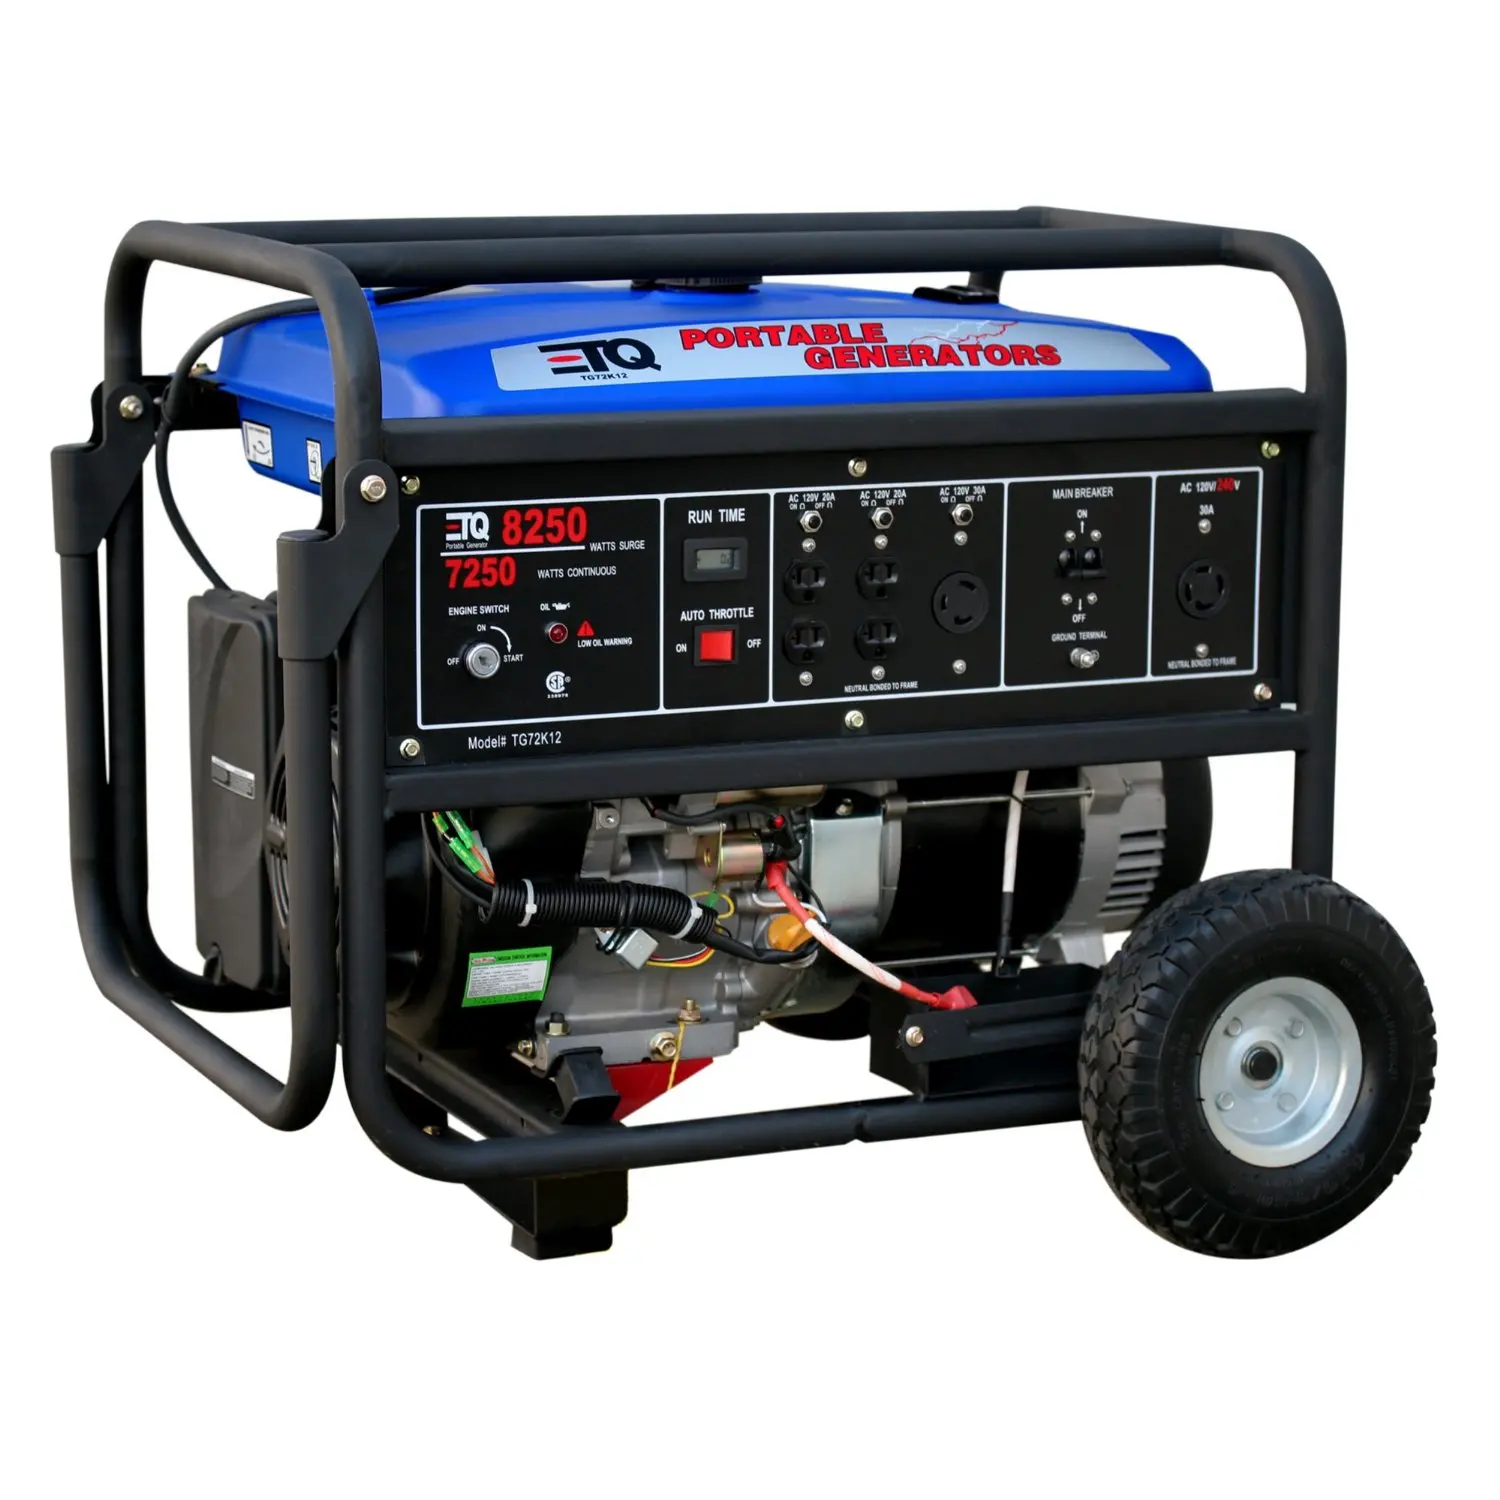 Cheap Etq Generator Parts, find Etq Generator Parts deals on line at